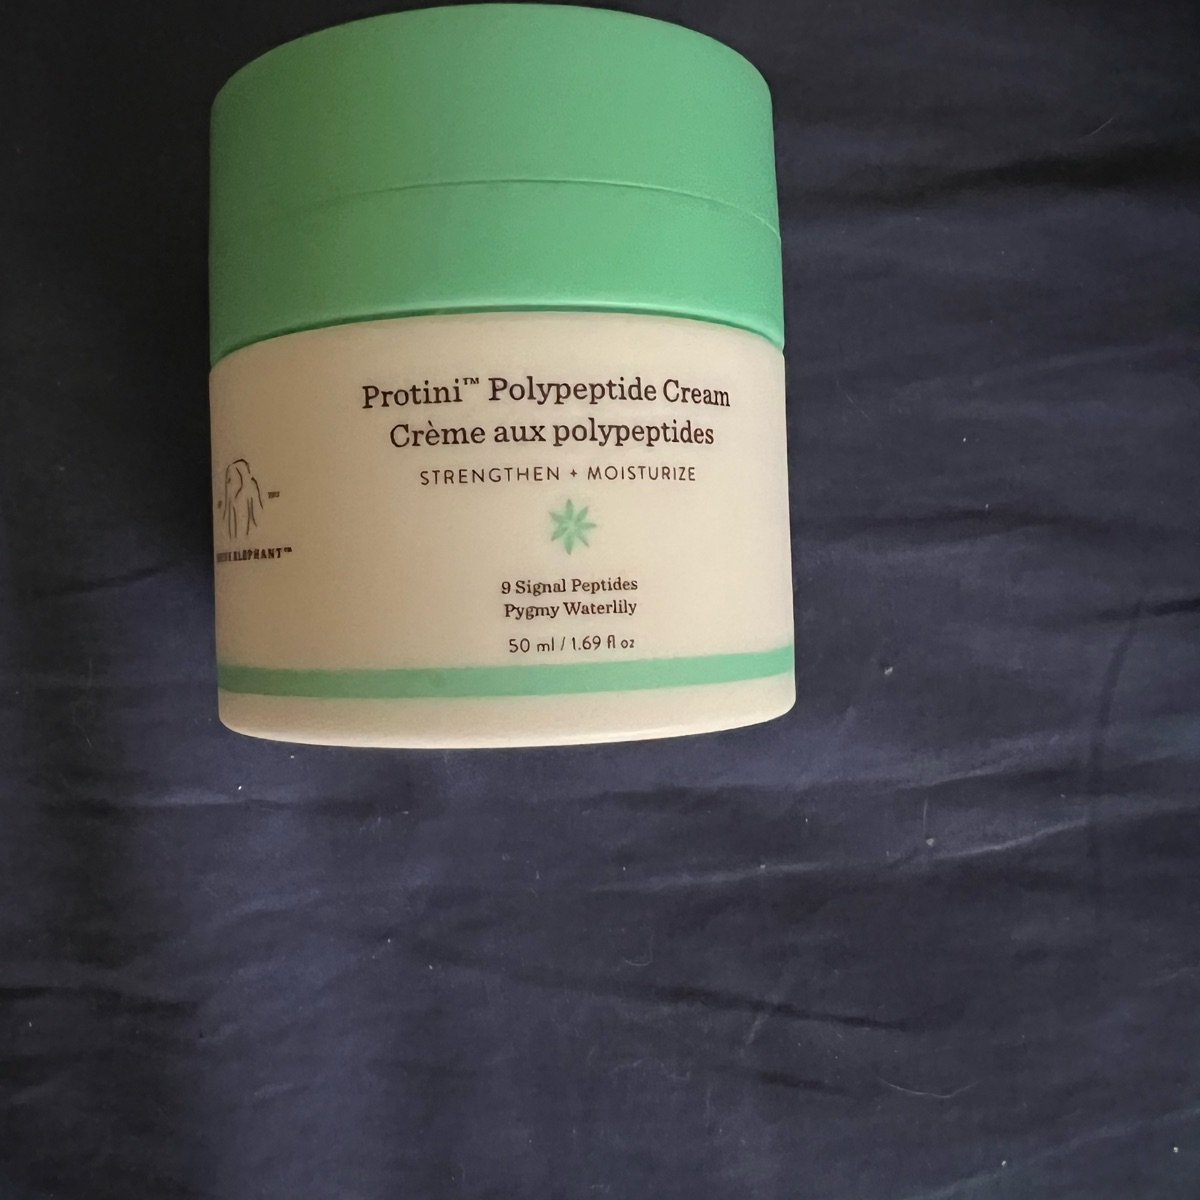 Drunk Elephant Protini Polypeptide Cream (Ingredients Explained)